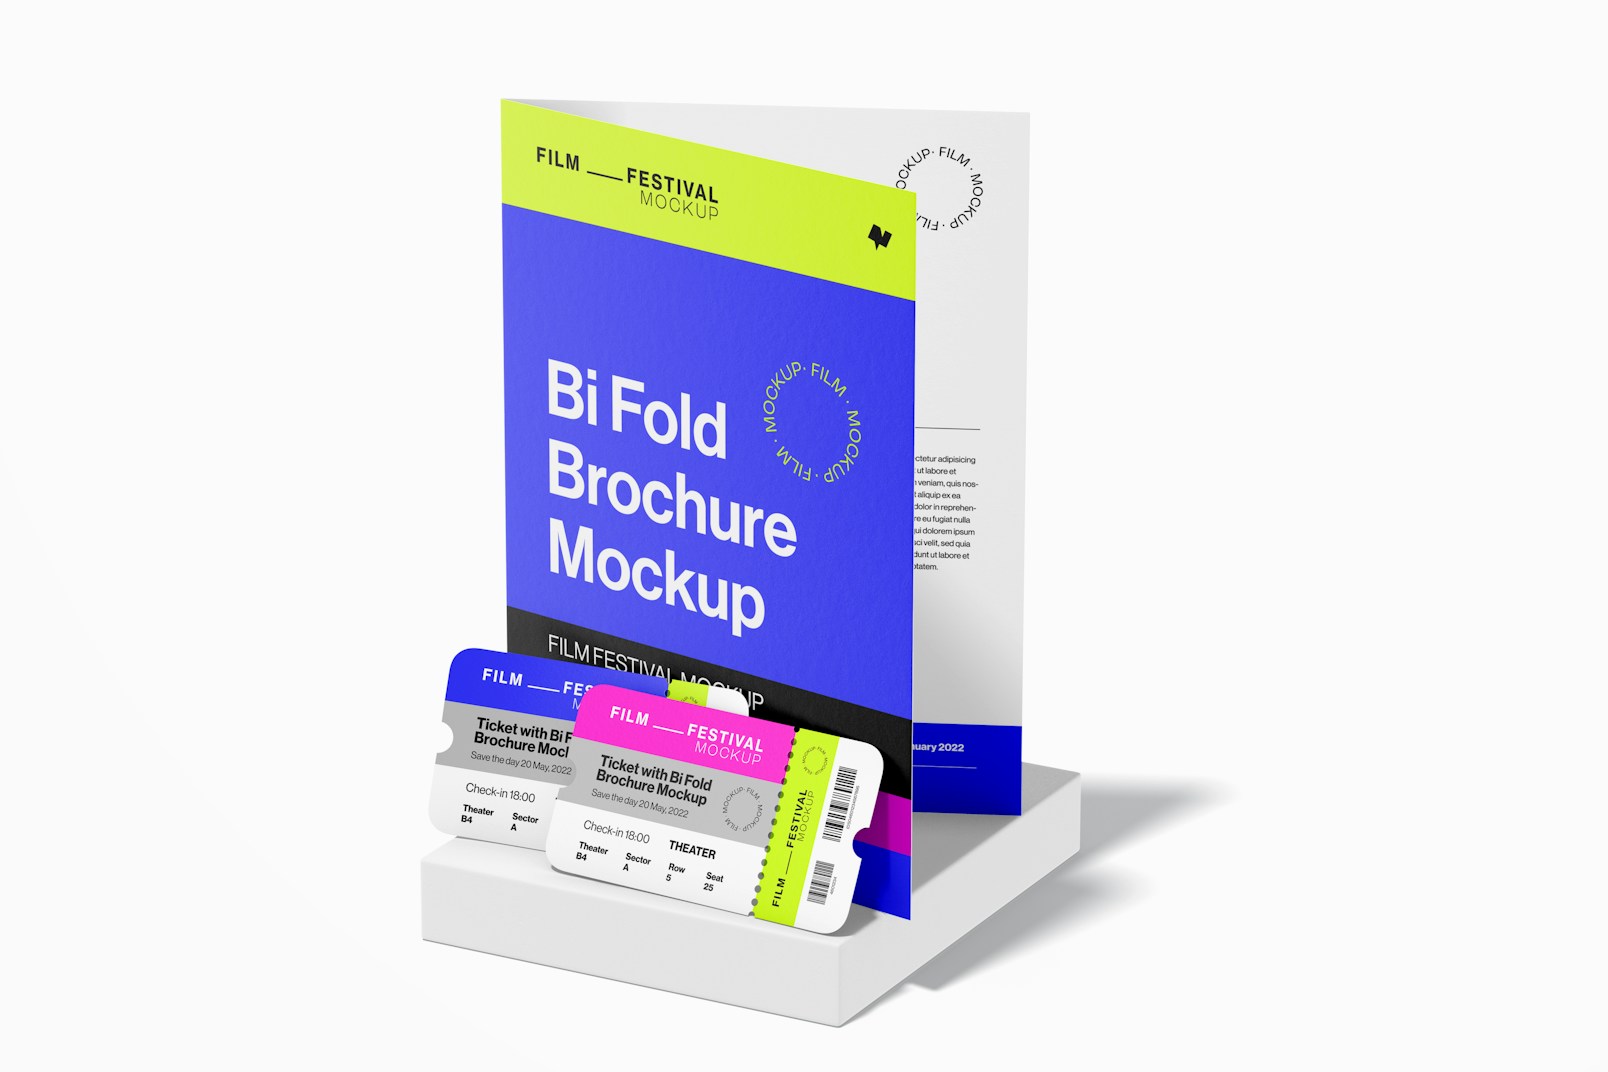 Ticket with Bi Fold Brochure Mockup, Perspective